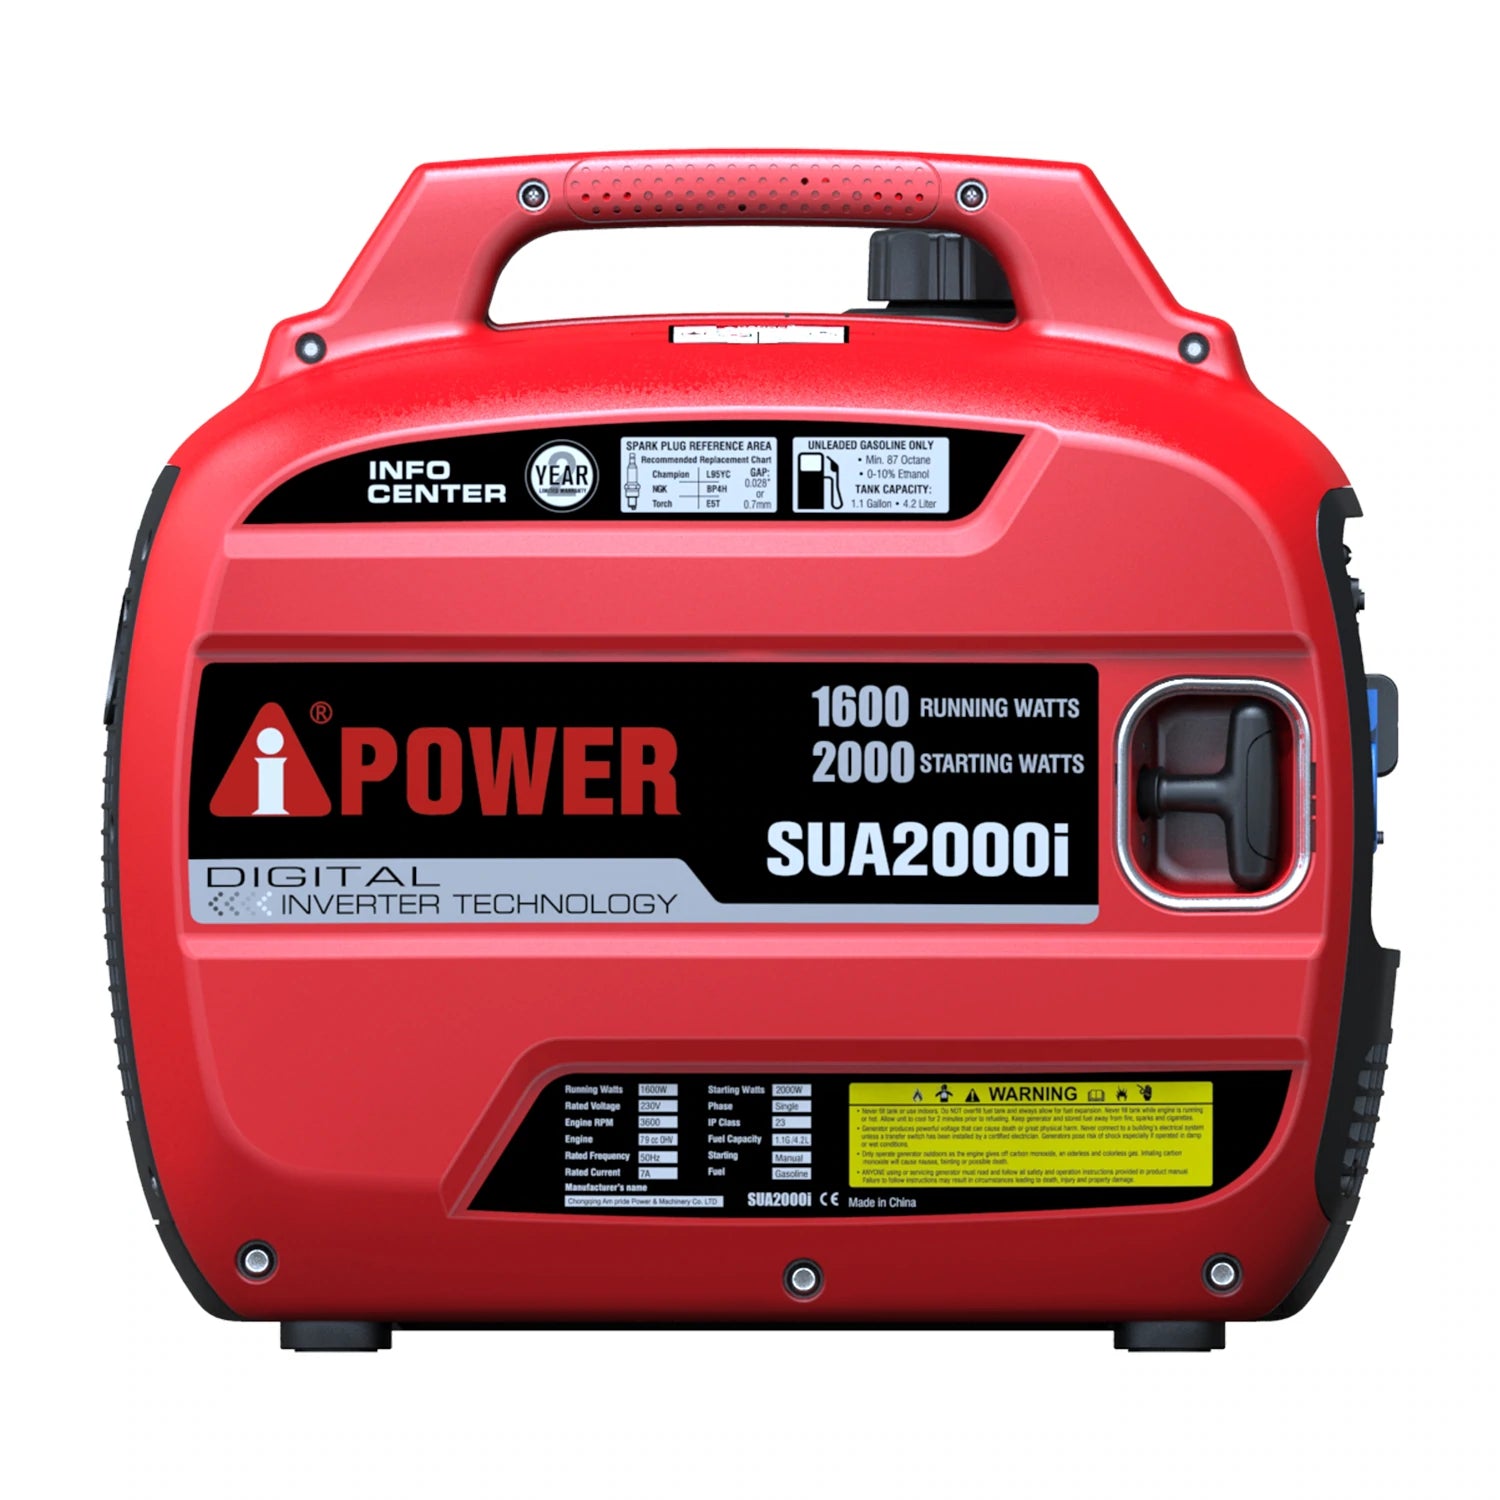  A-iPower Portable Inverter Generator, 2000W Ultra